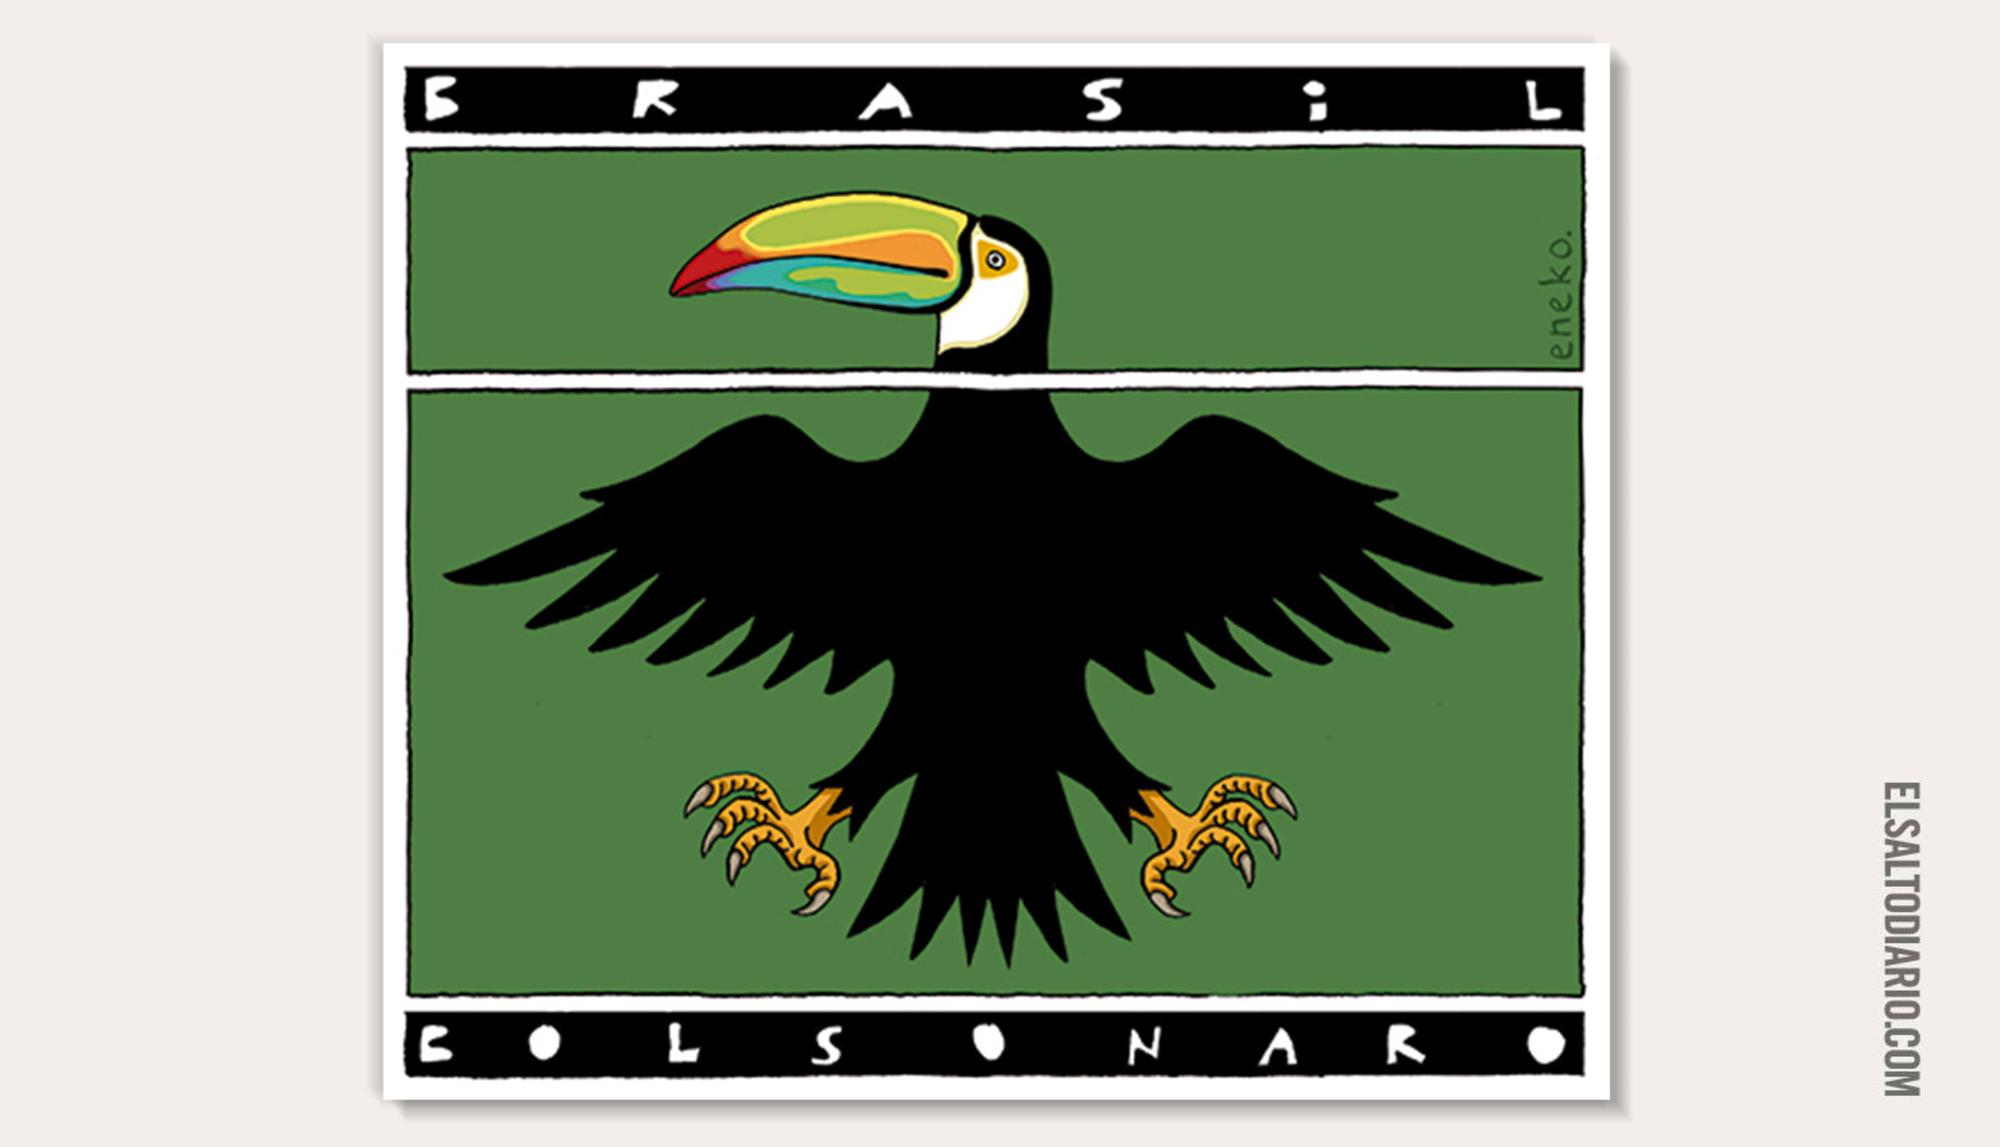 Brasil Bolsonaro Eneko